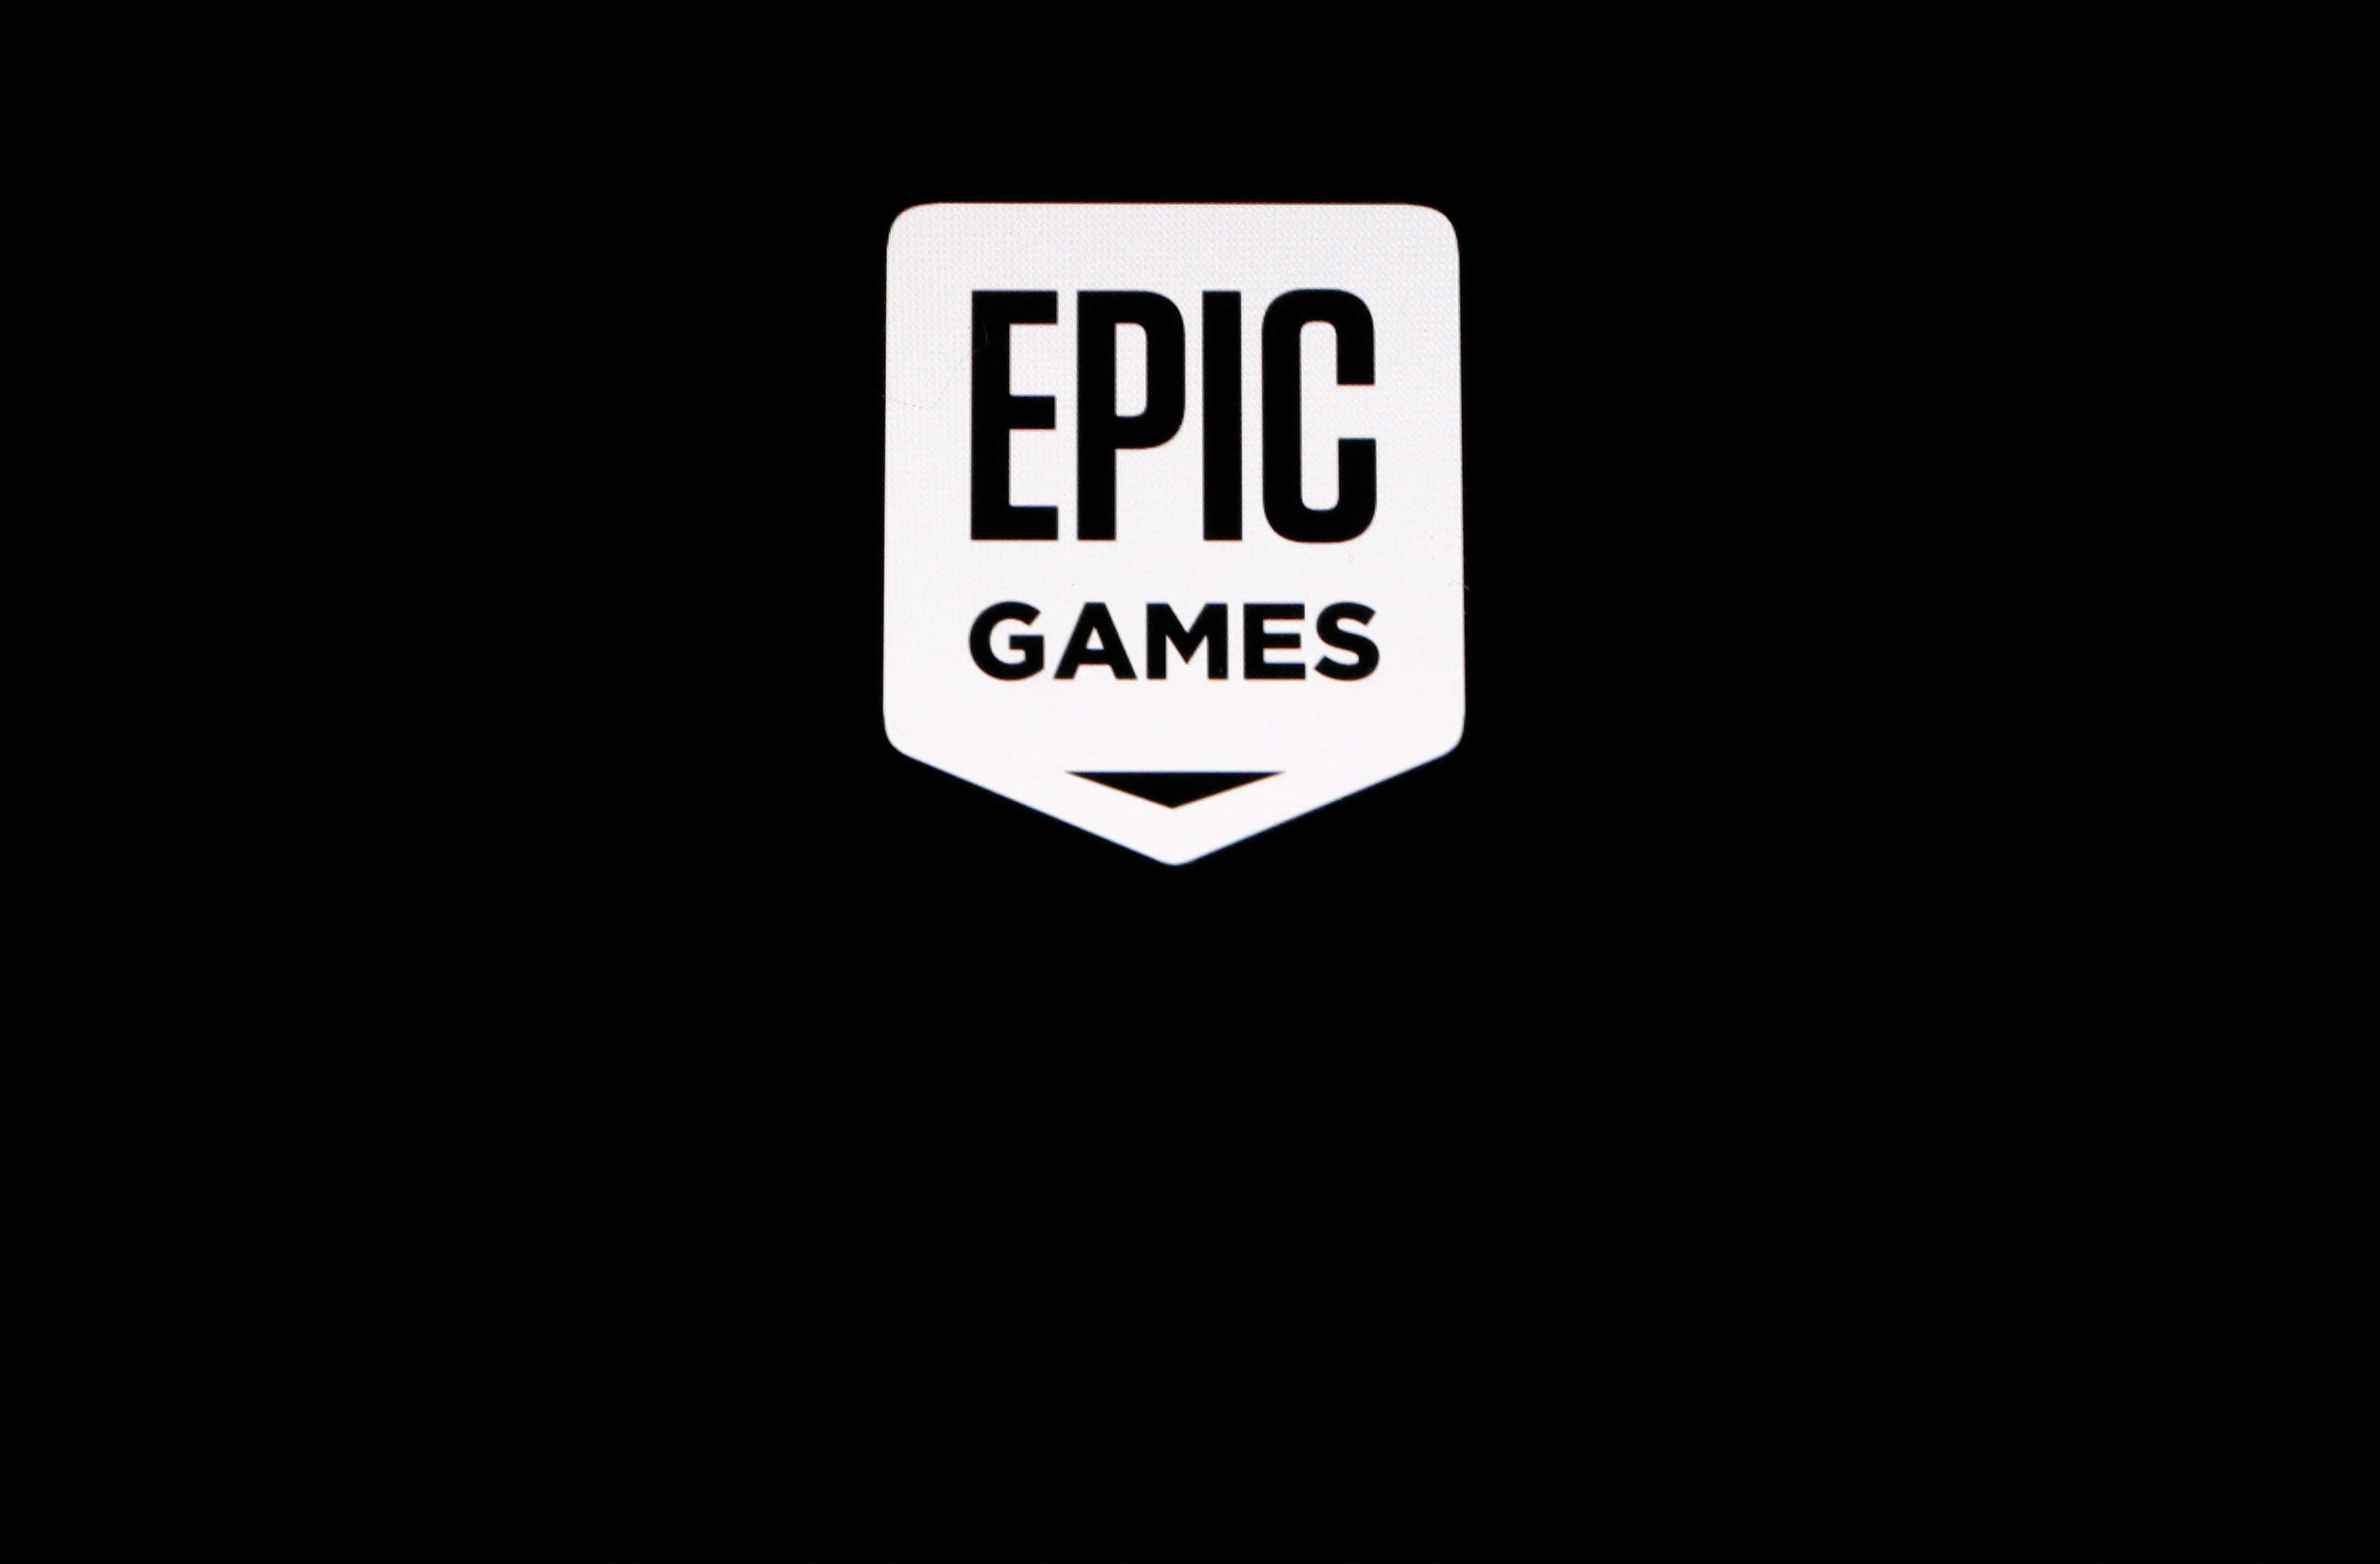 Fortnite' maker Epic Games gets $28.7 bln valuation in latest funding